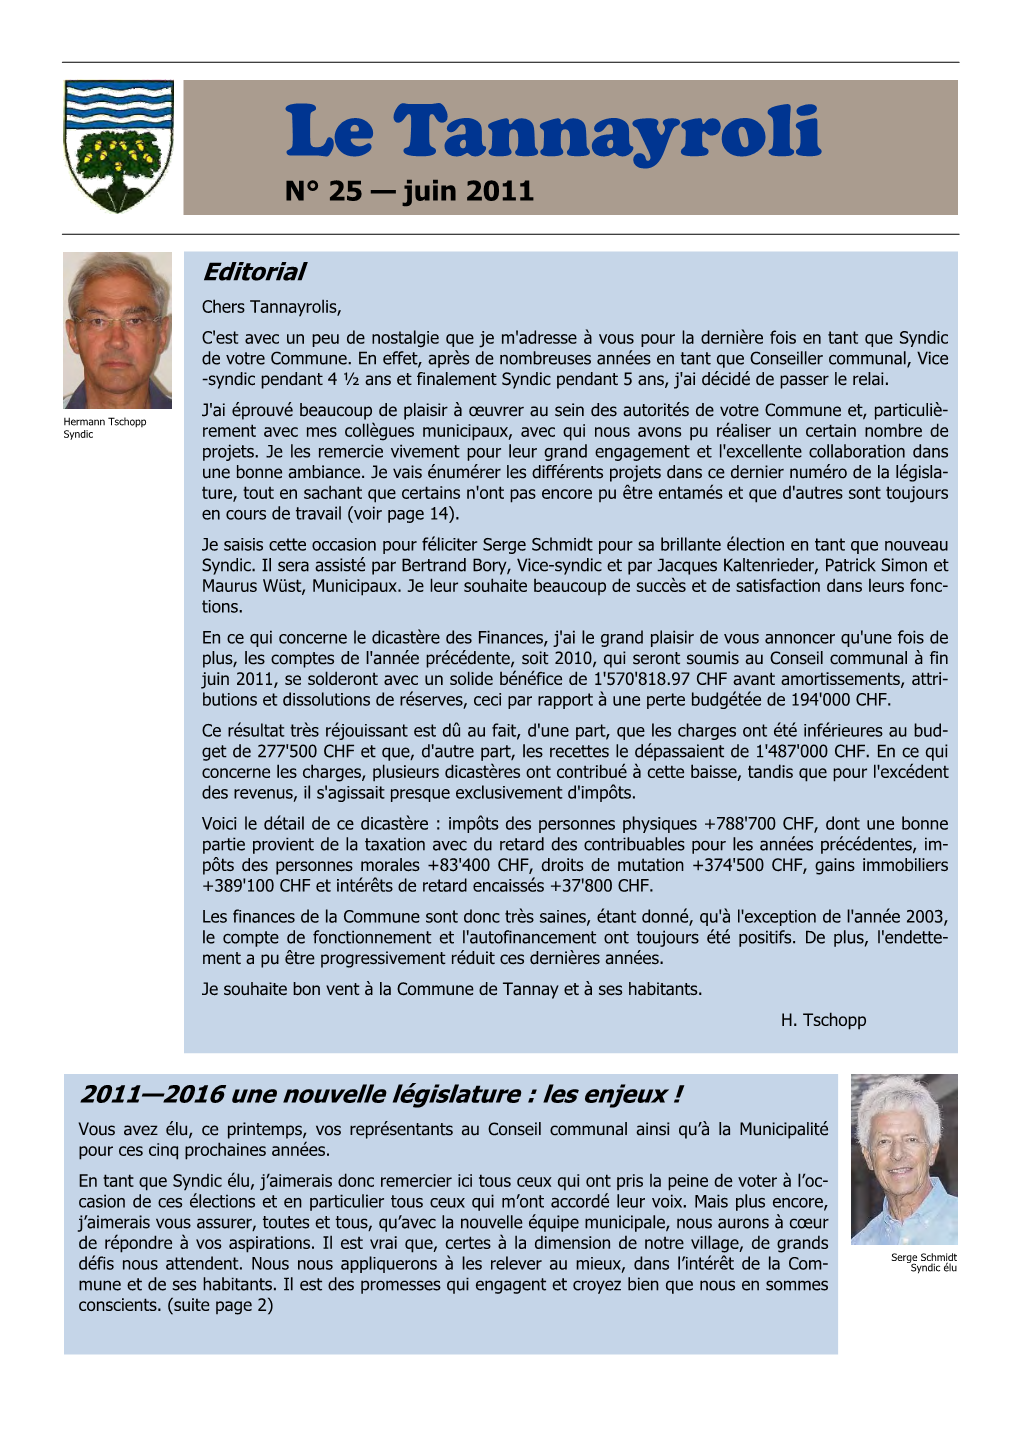 Le Tannayroli N° 25 — Juin 2011